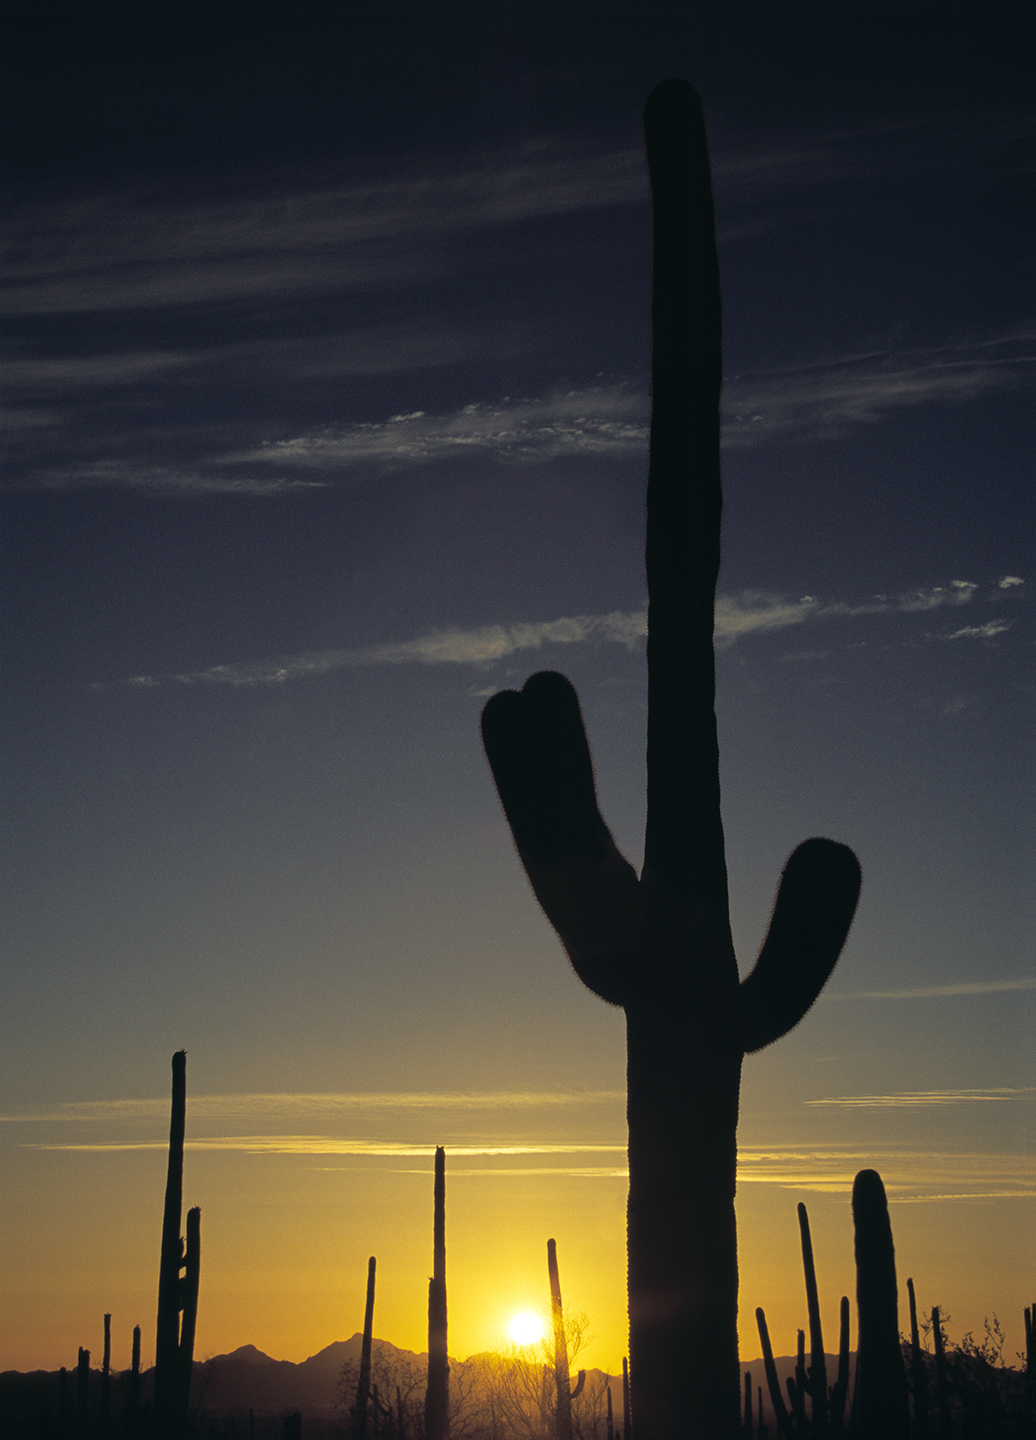 Saguaro cactus, Tucson, AZ